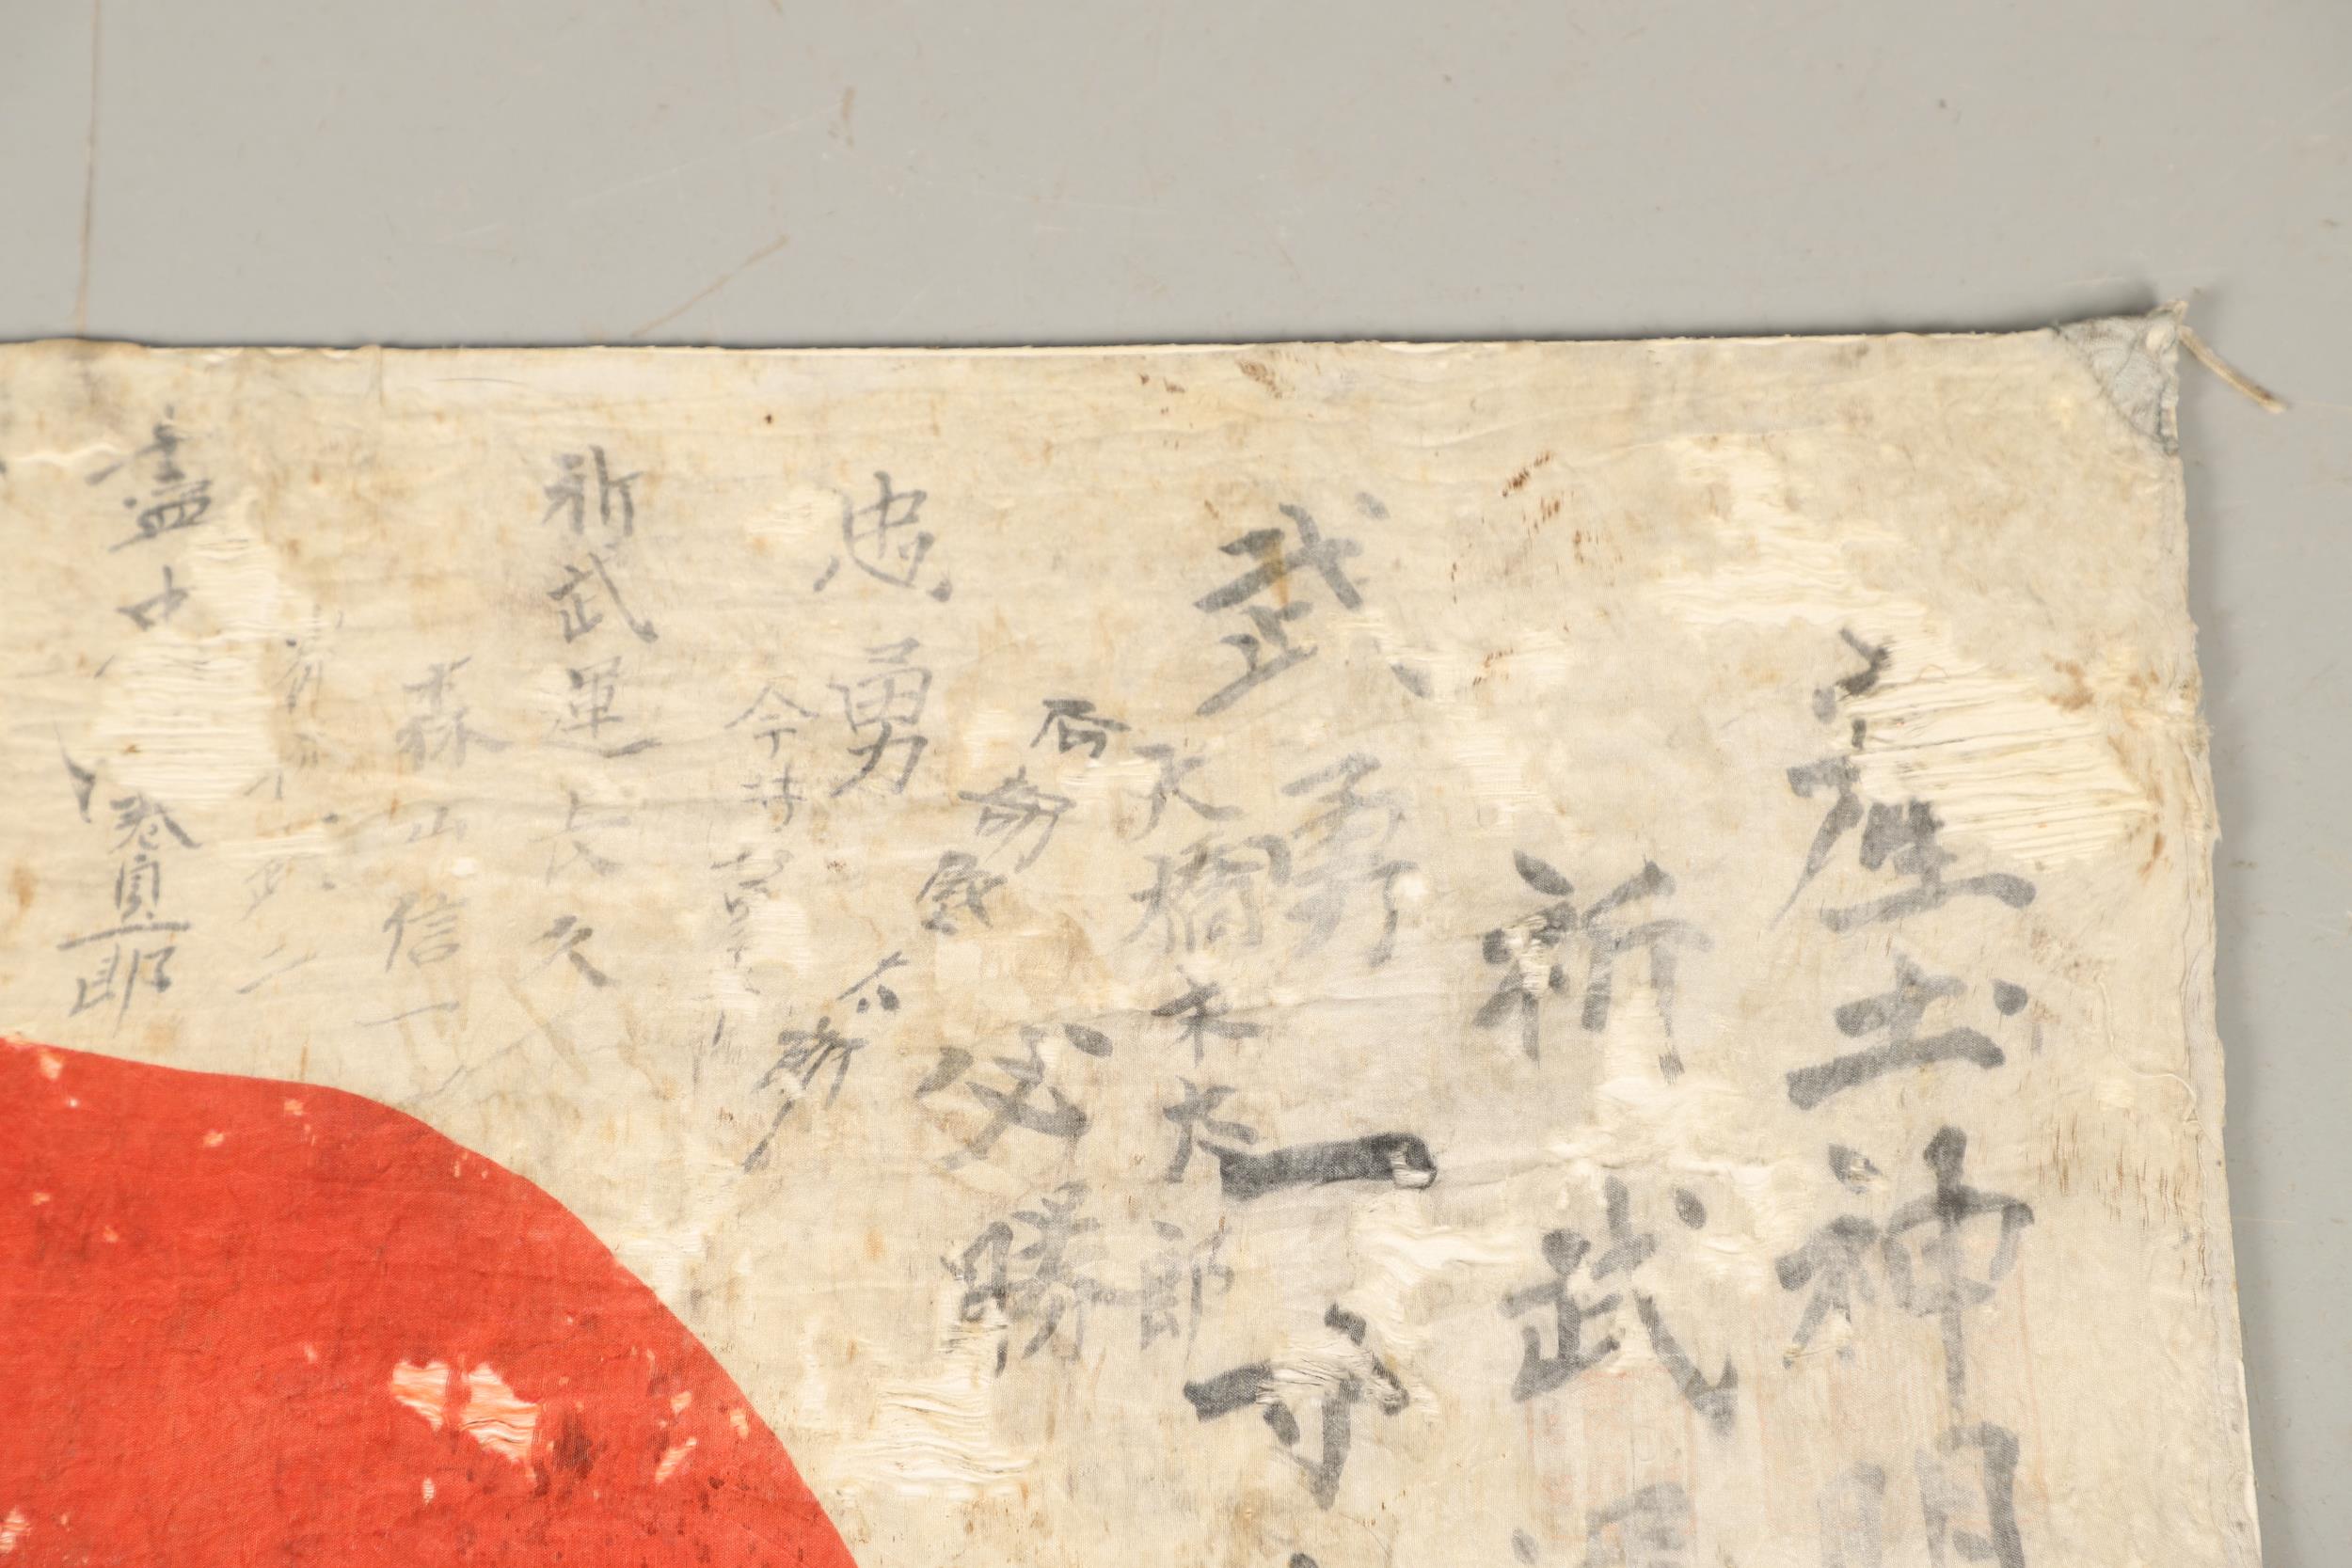 A SECOND WORLD WAR JAPANESE FLAG CAPTURED AT KOHIMA. - Image 4 of 8